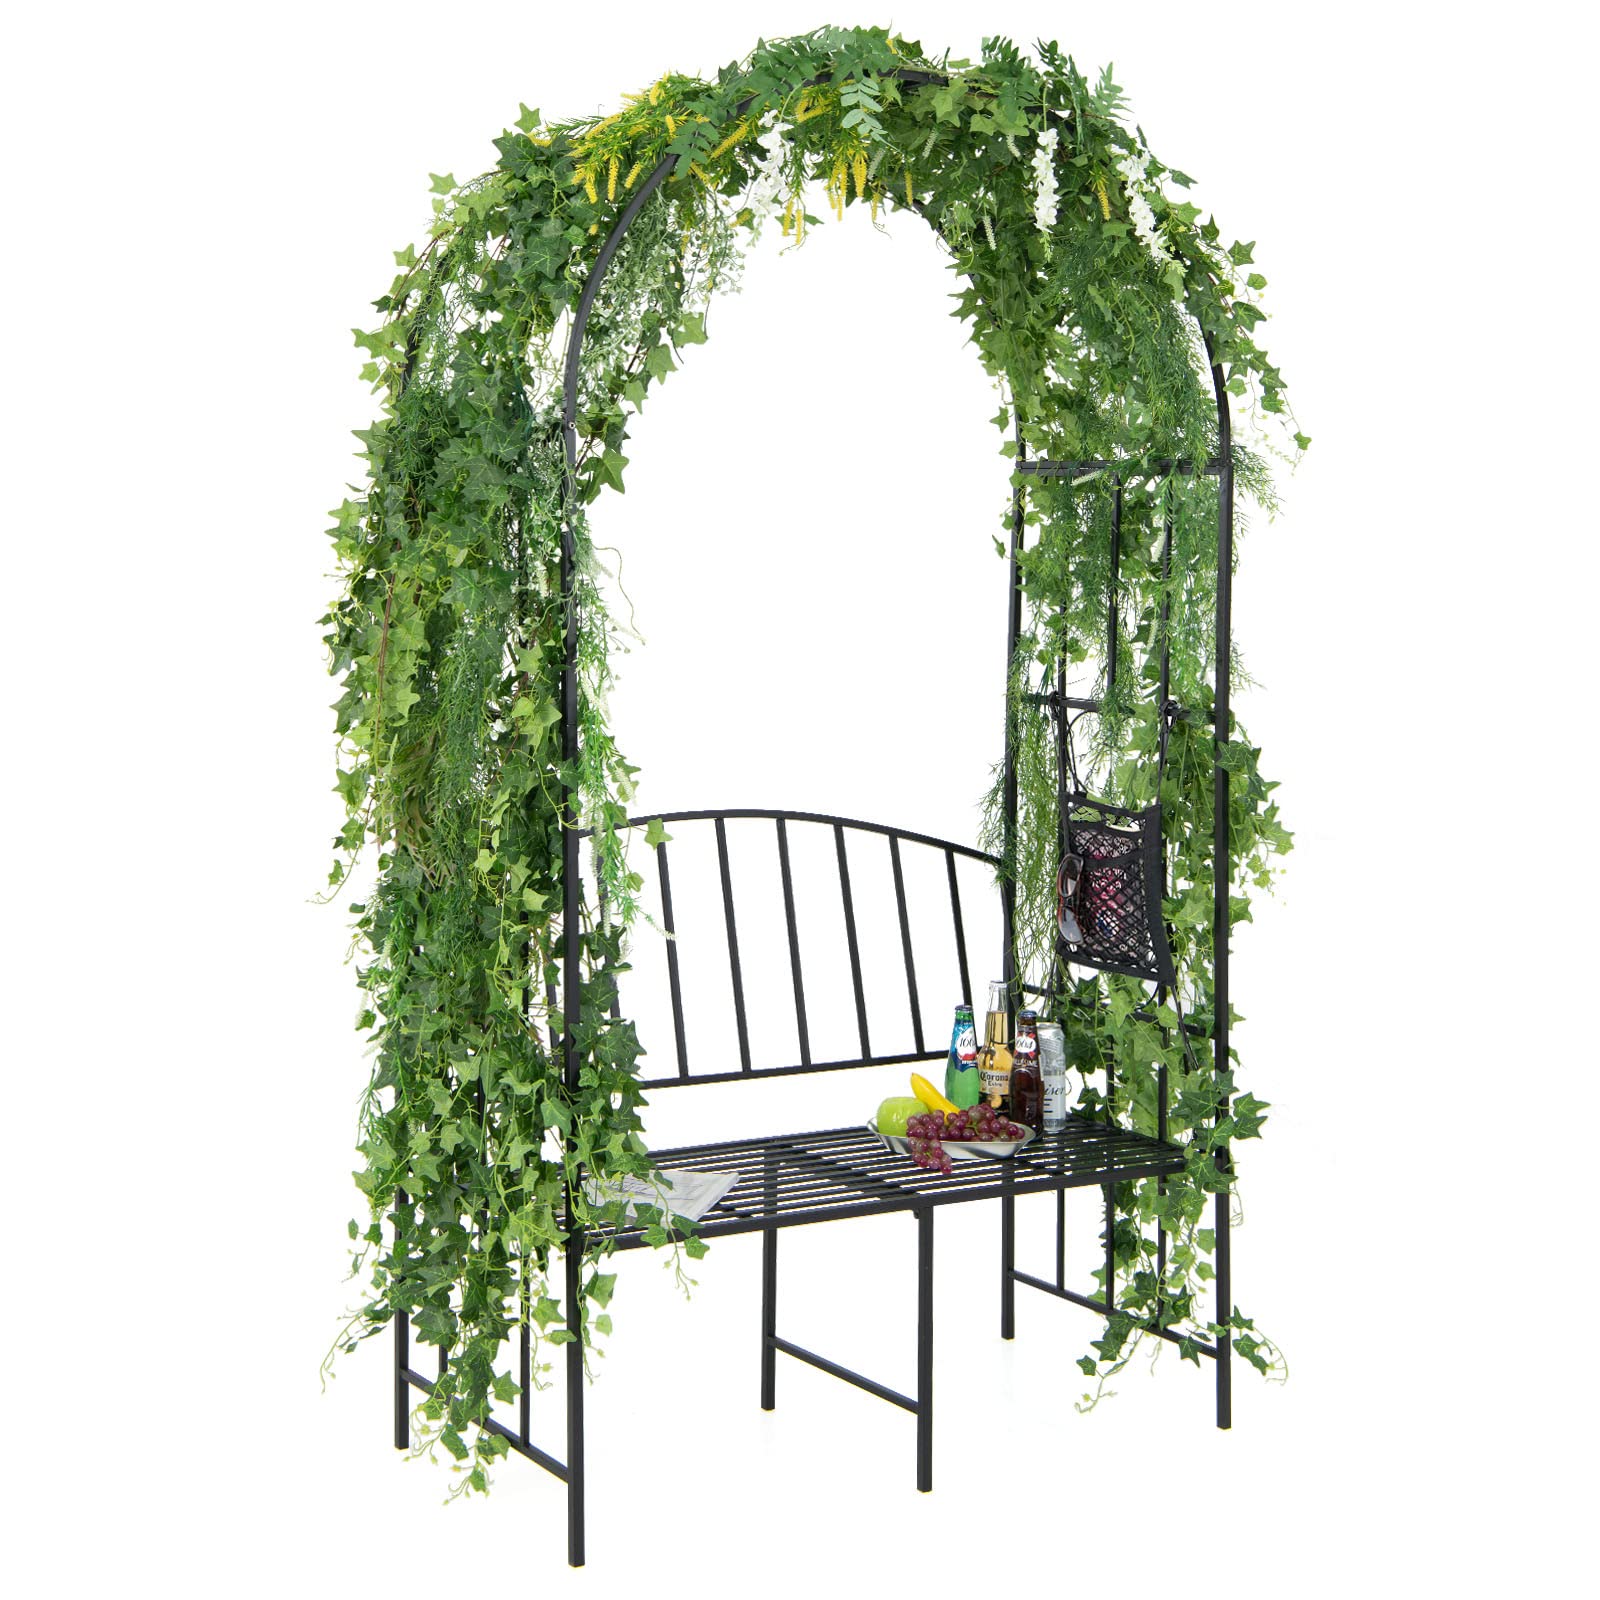 Giantex 81in Metal Garden Arch with Bench, Outdoor Garden Arbor Archway Trellis for Climbing Plants Vines